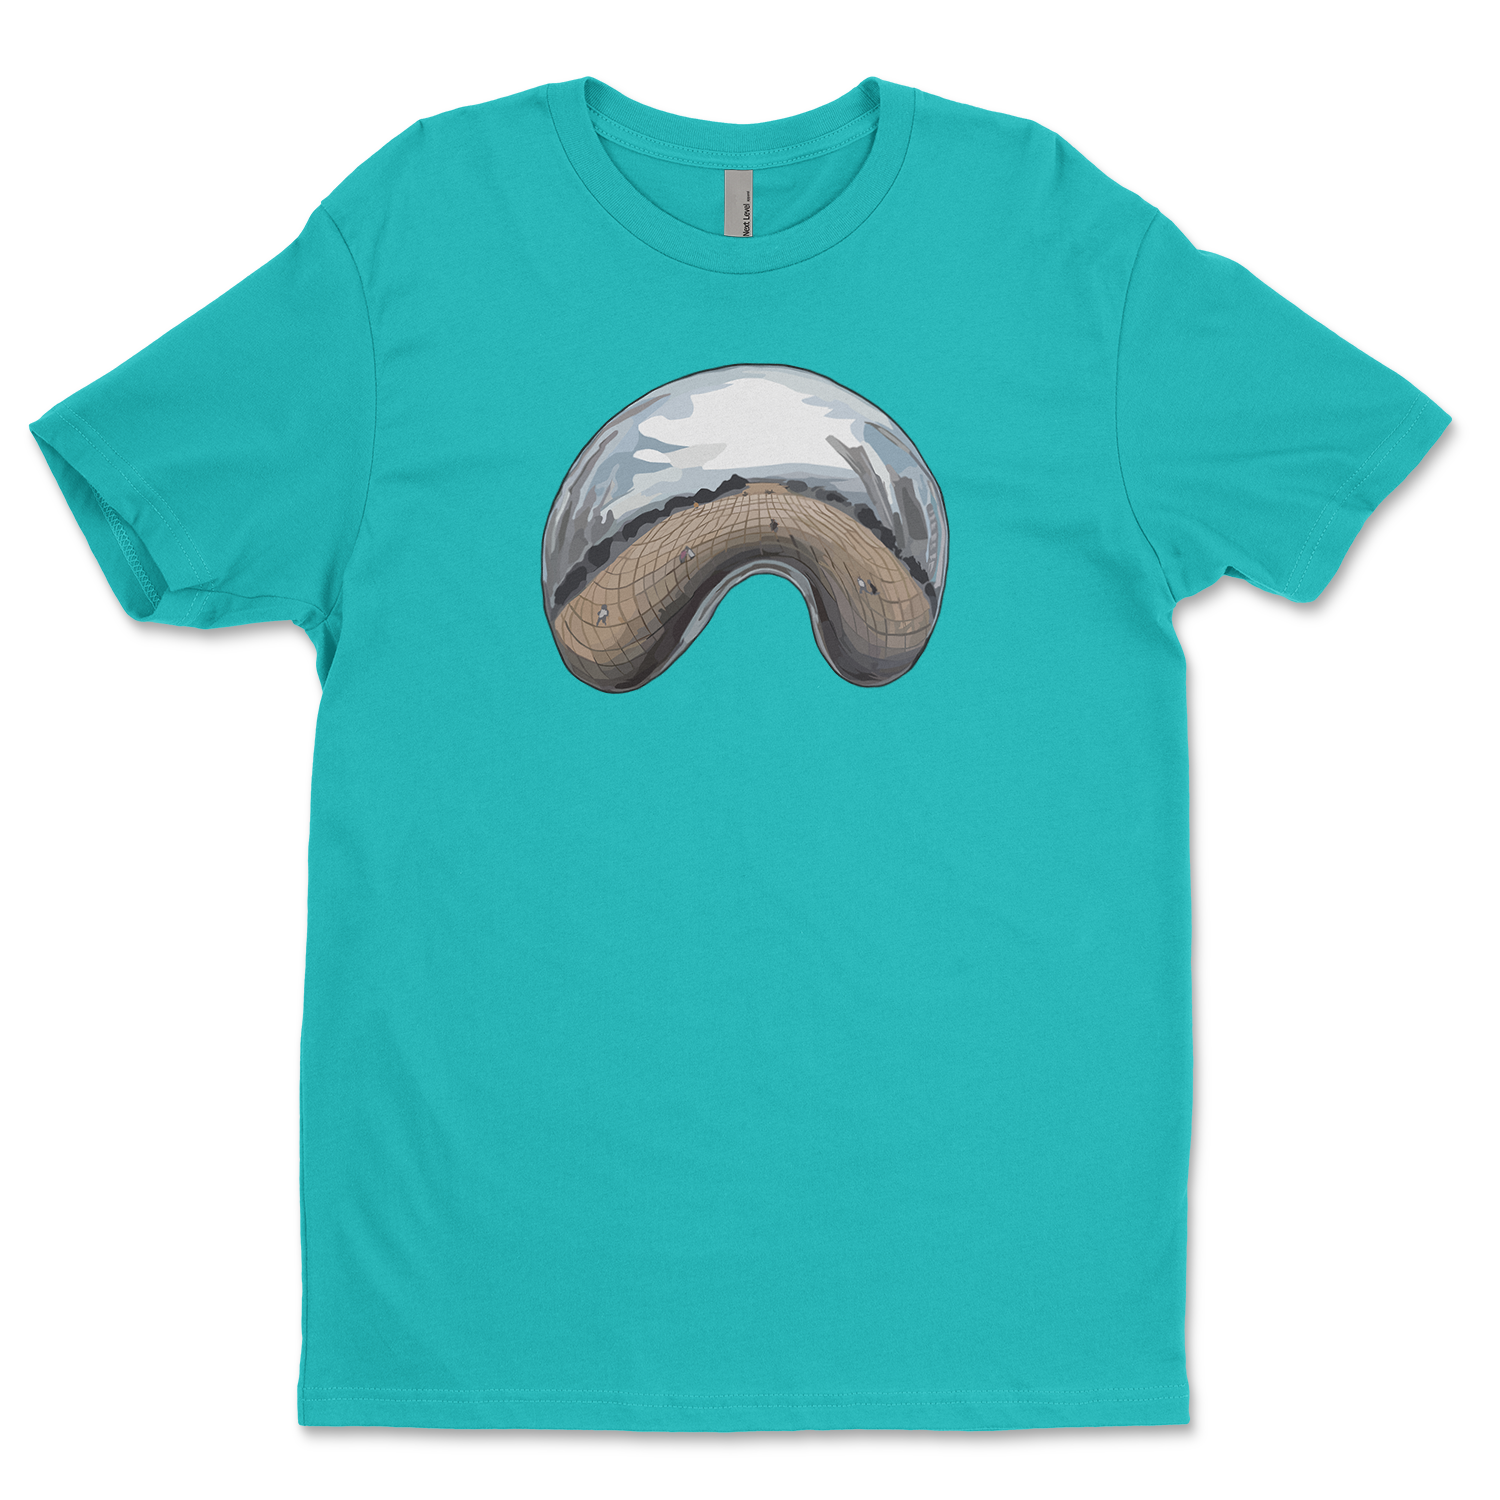 "The Bean - Millennium Park" Unisex T-Shirt